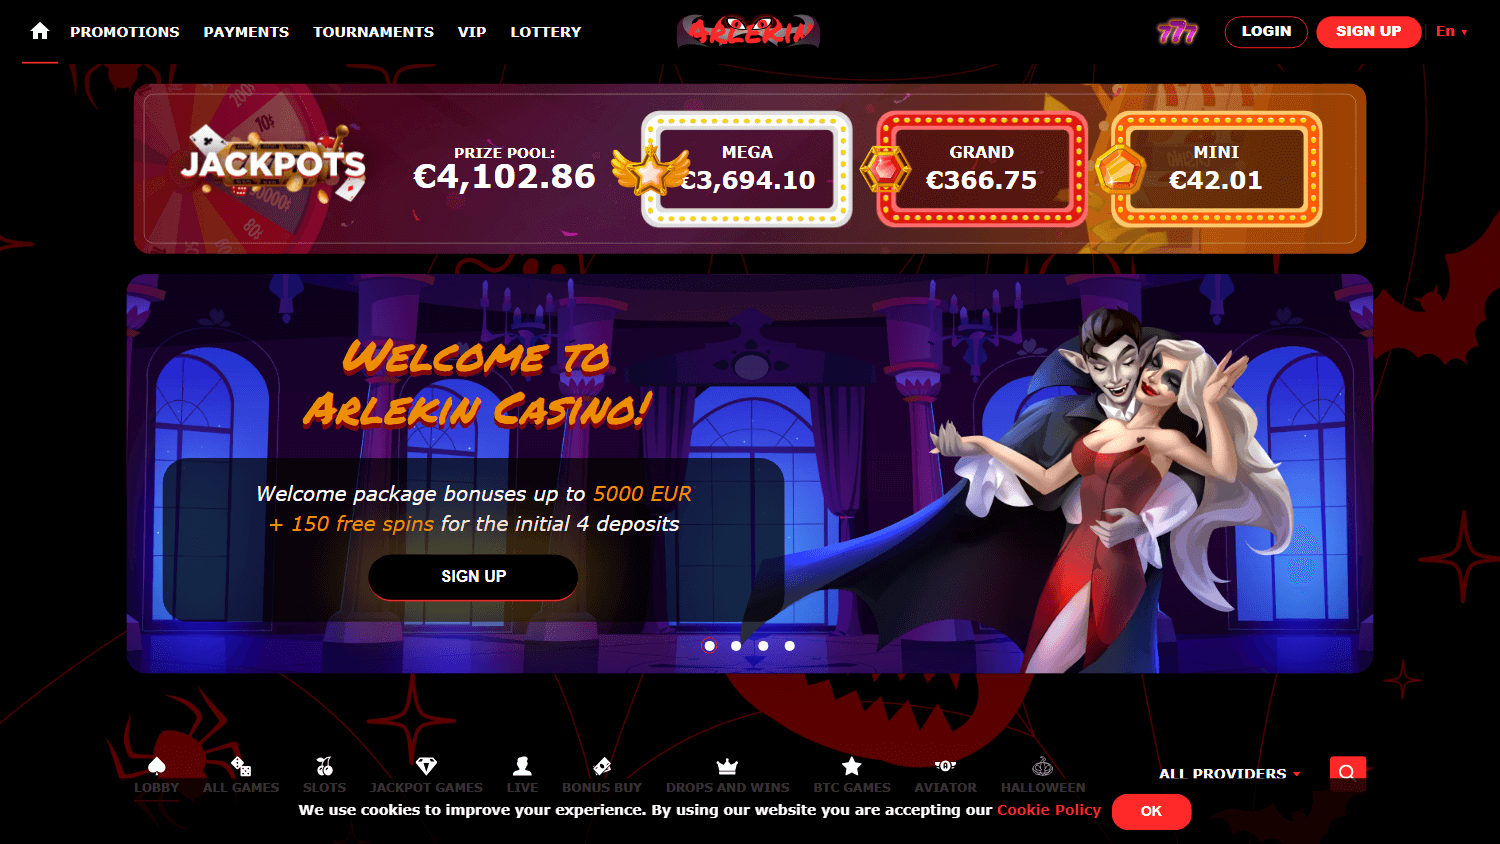 arlekin_casino_homepage_desktop